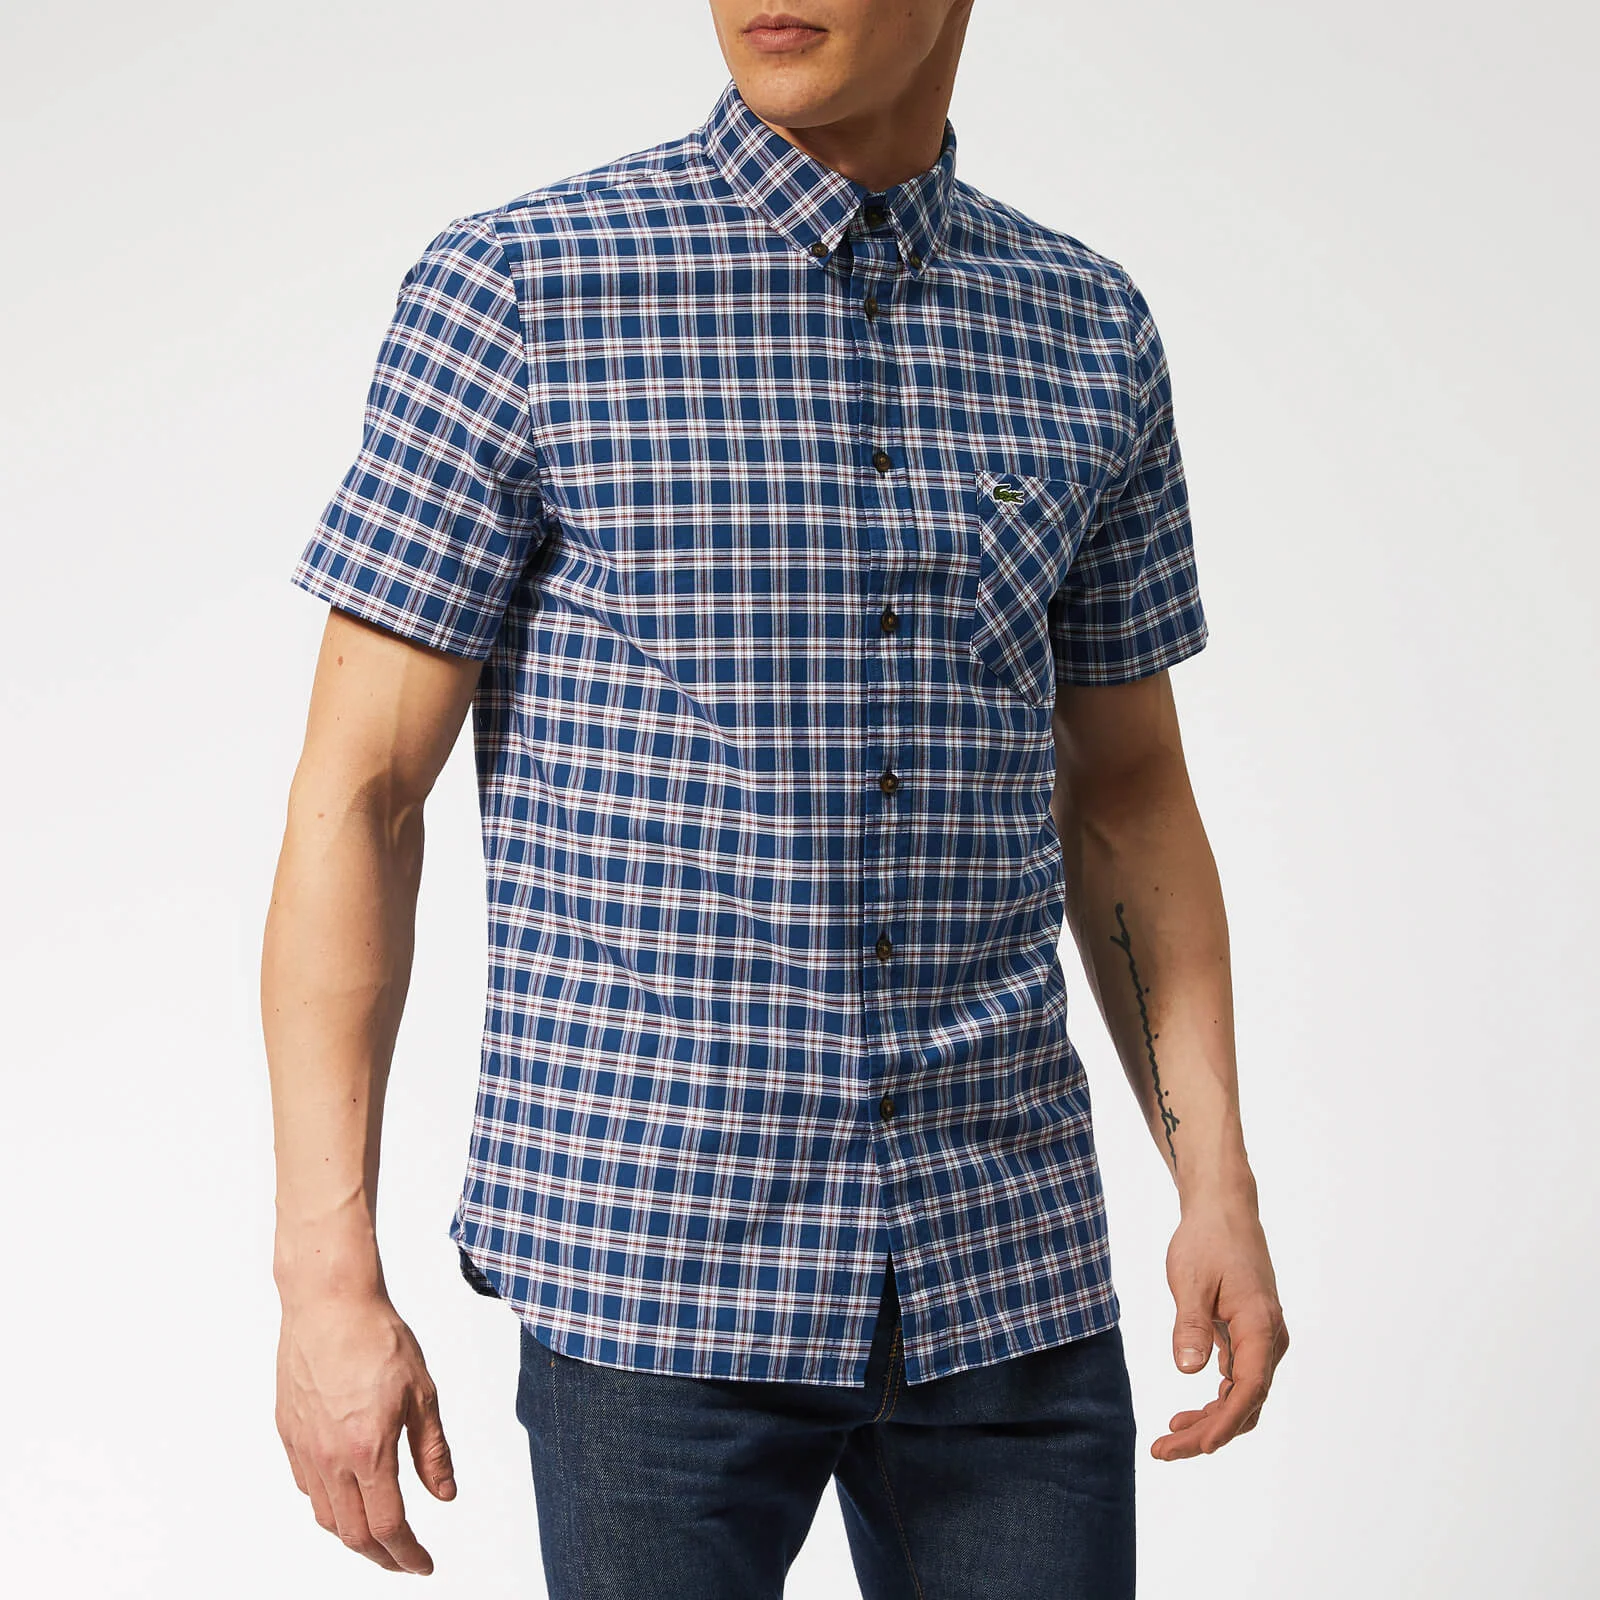 Lacoste Men's Oxford Check Short Sleeve Shirt - Inkwell/Iberis Image 1